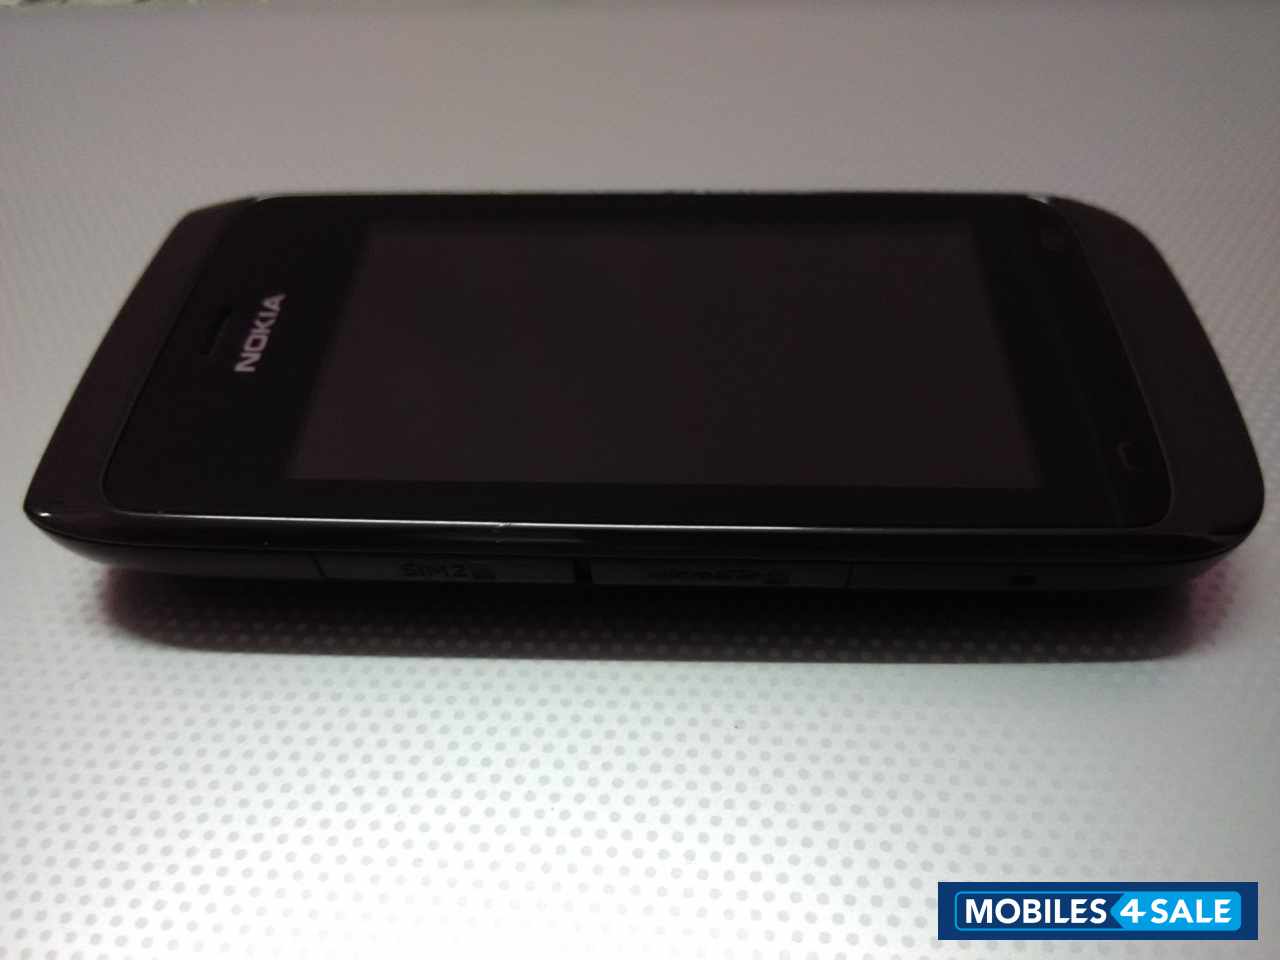 Black Nokia Asha 308